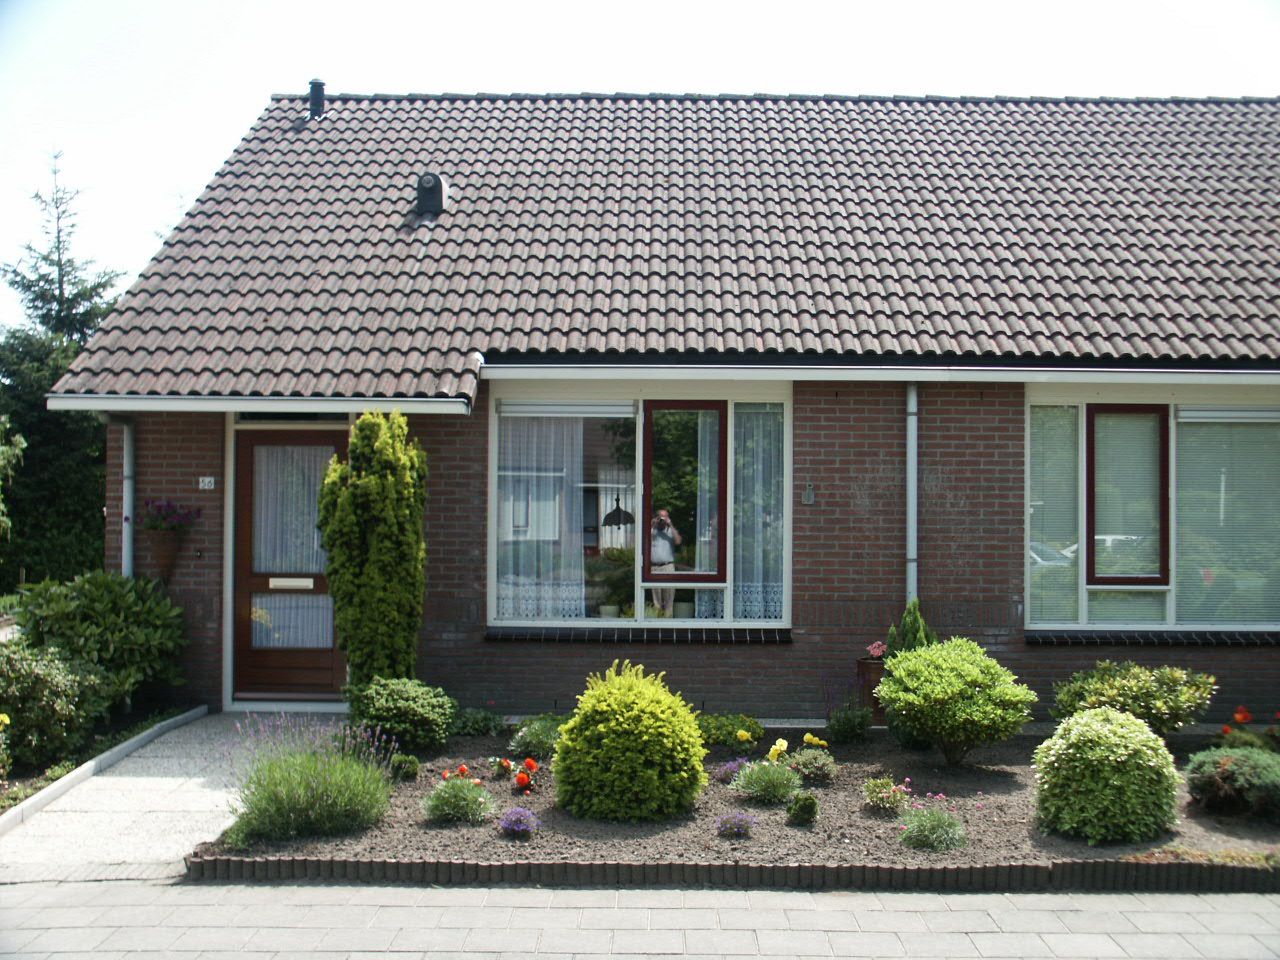 Caeciliënkamp 56, 7161 CV Neede, Nederland